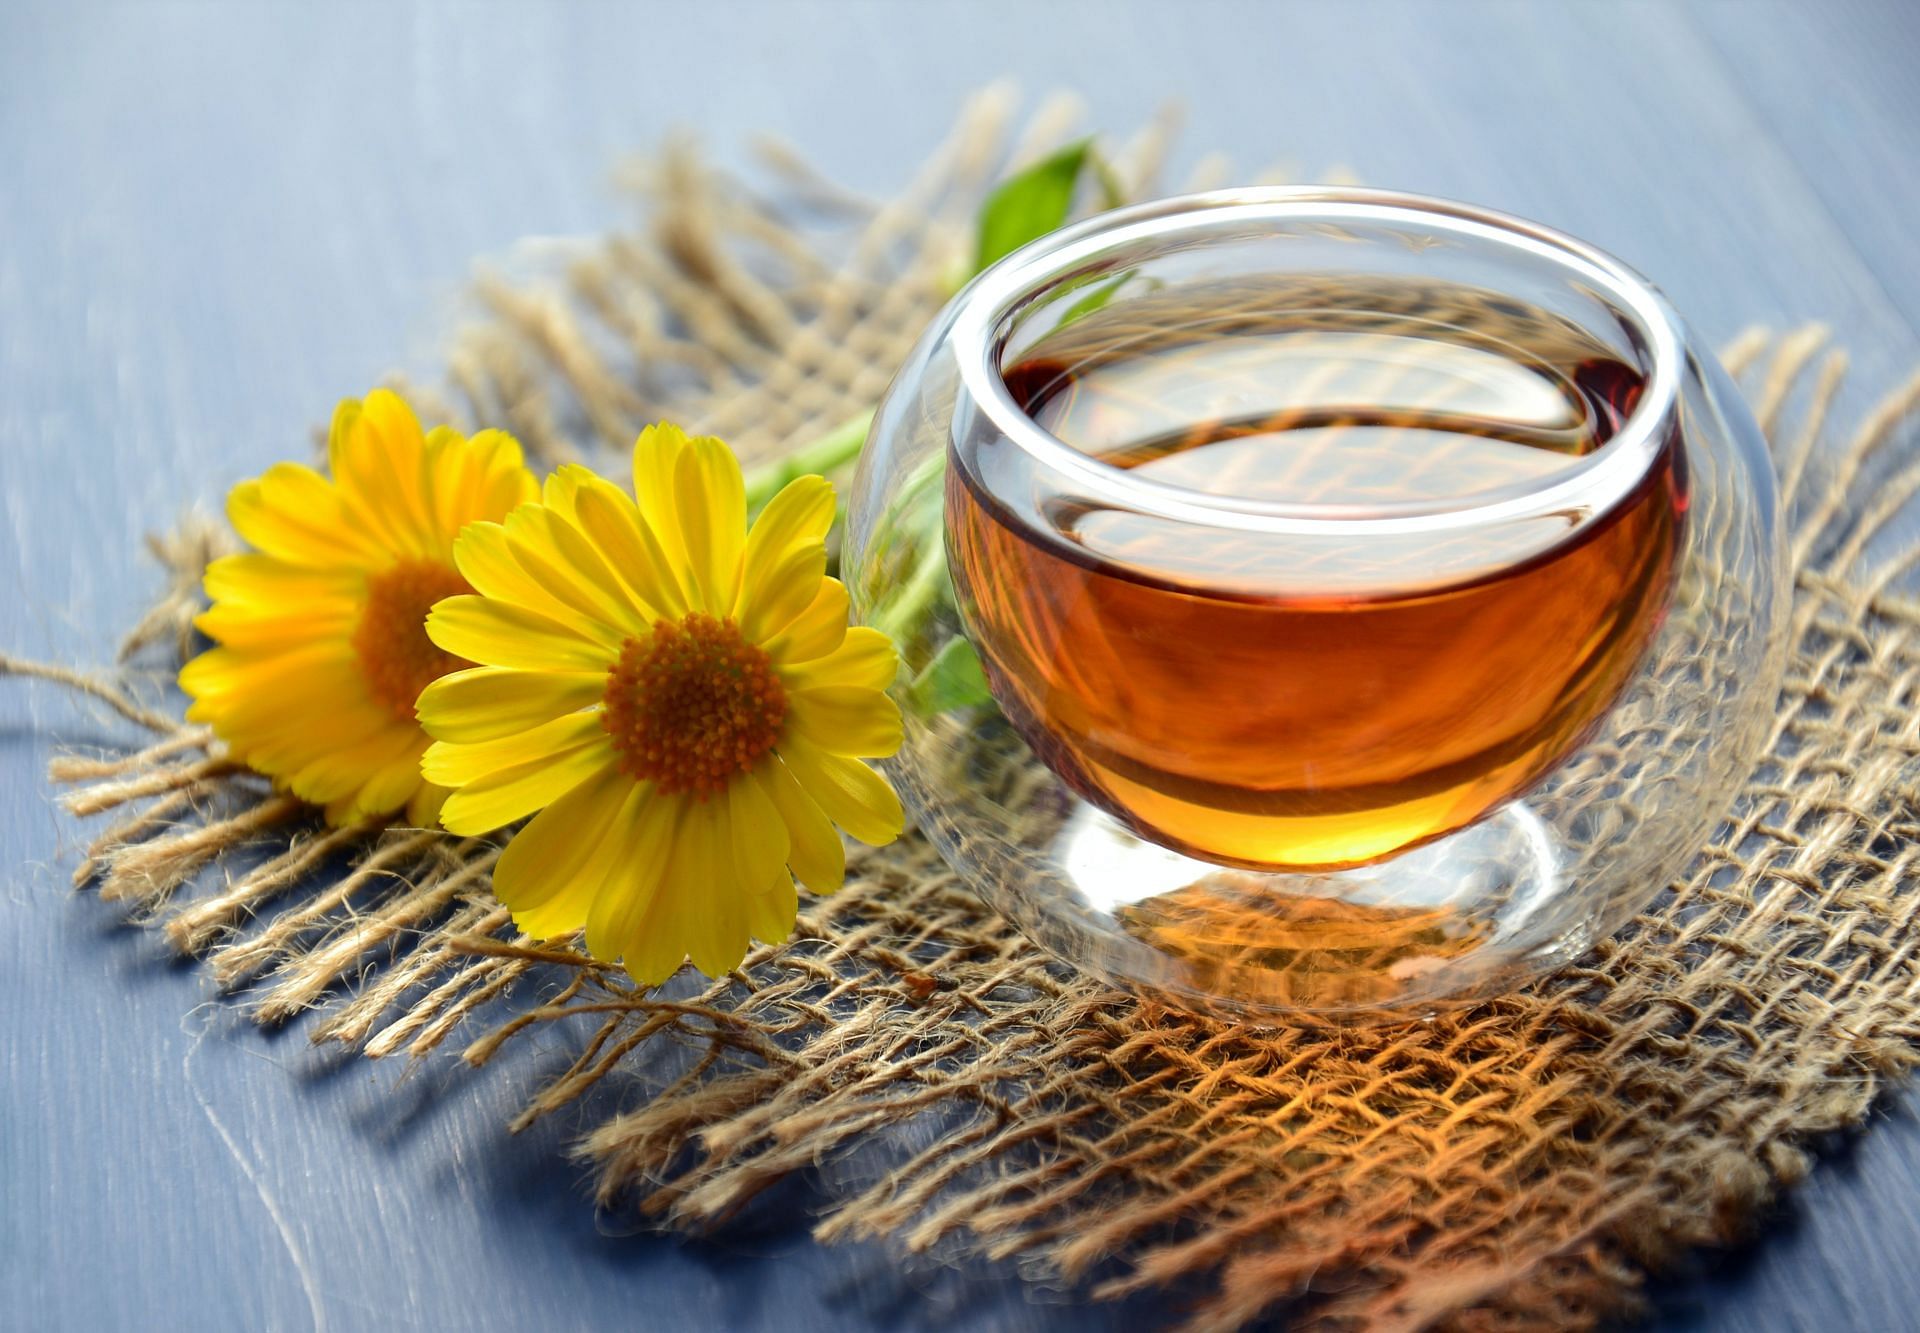 Fennel tea benefits for menstruation  (image sourced via Pexels / Photo by mareefe)